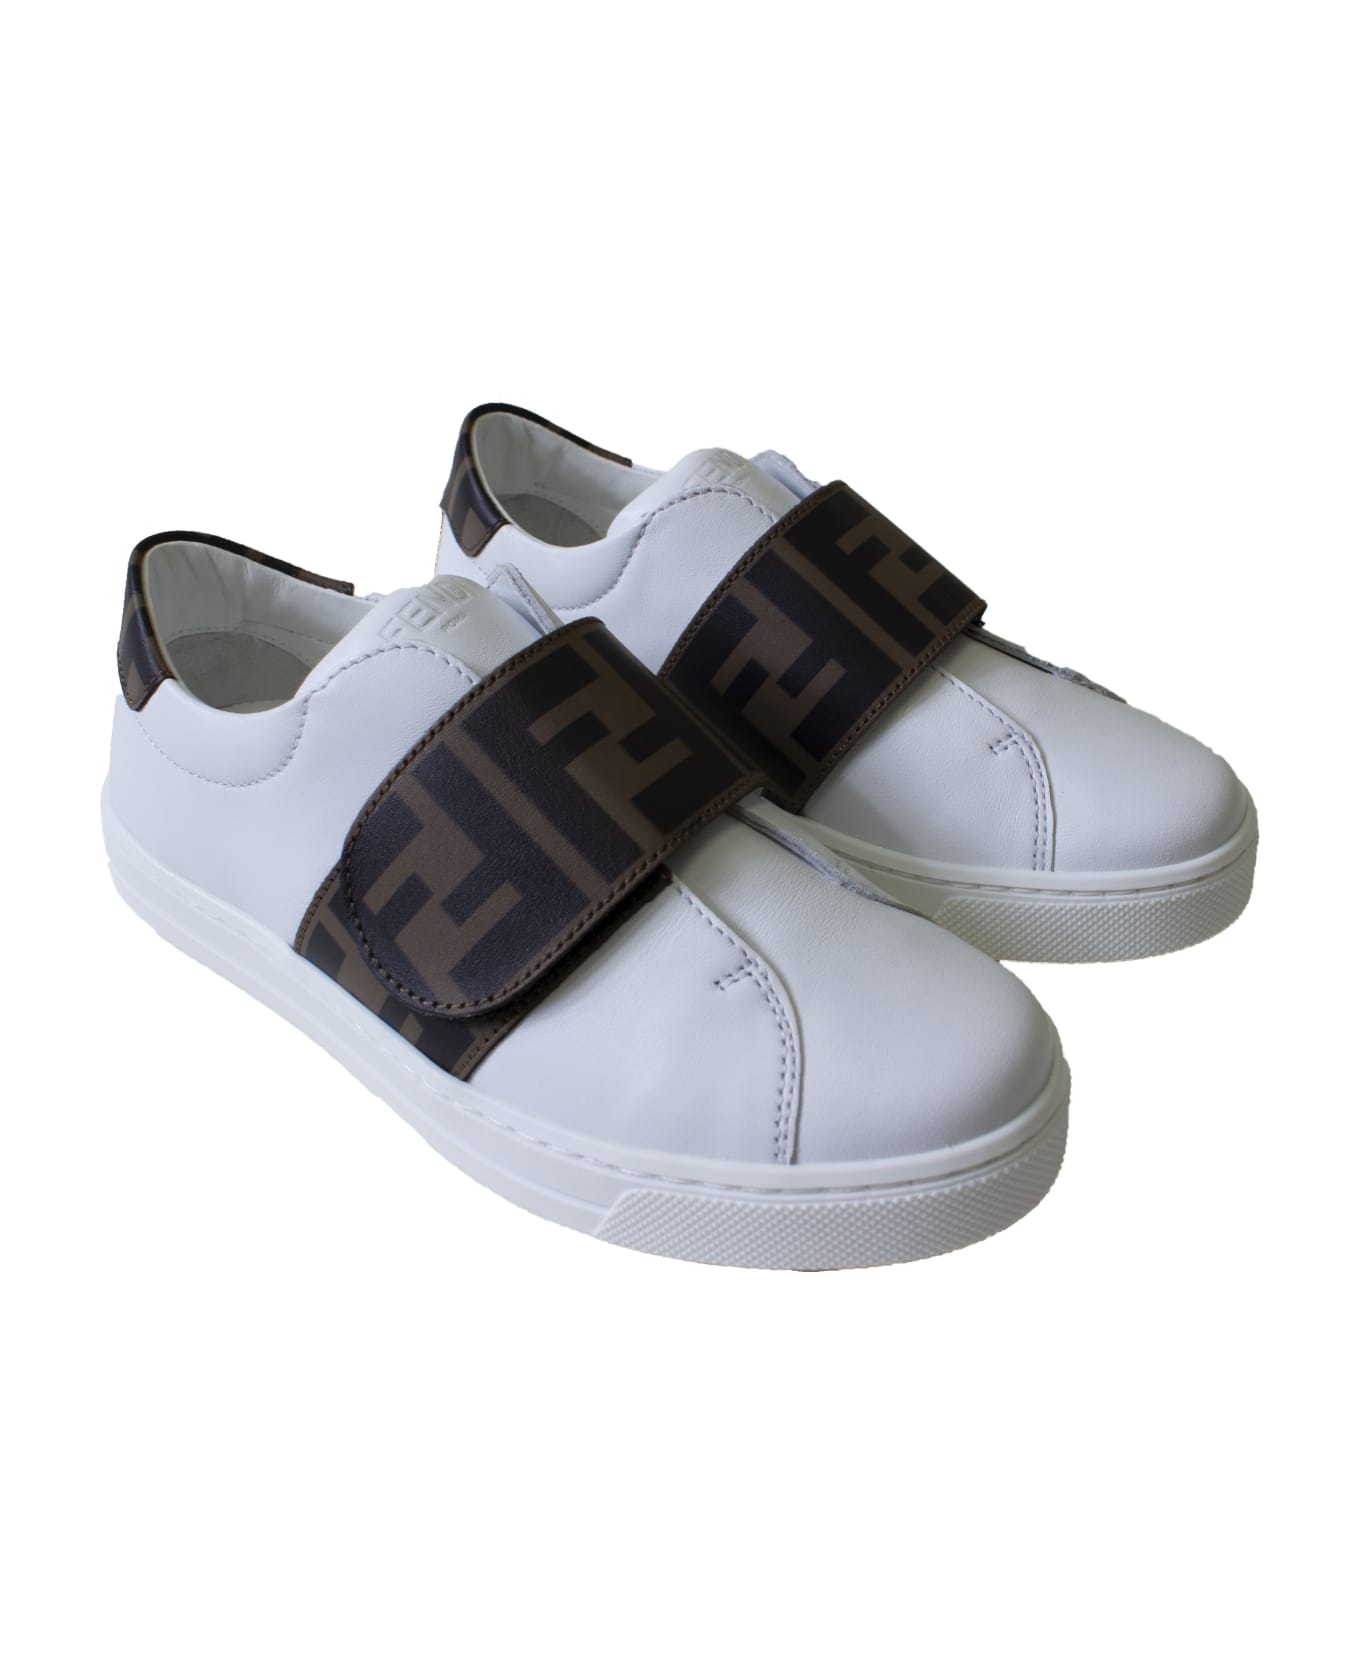 Fendi Kids Sneakers - A Bianco Tabacco Nero